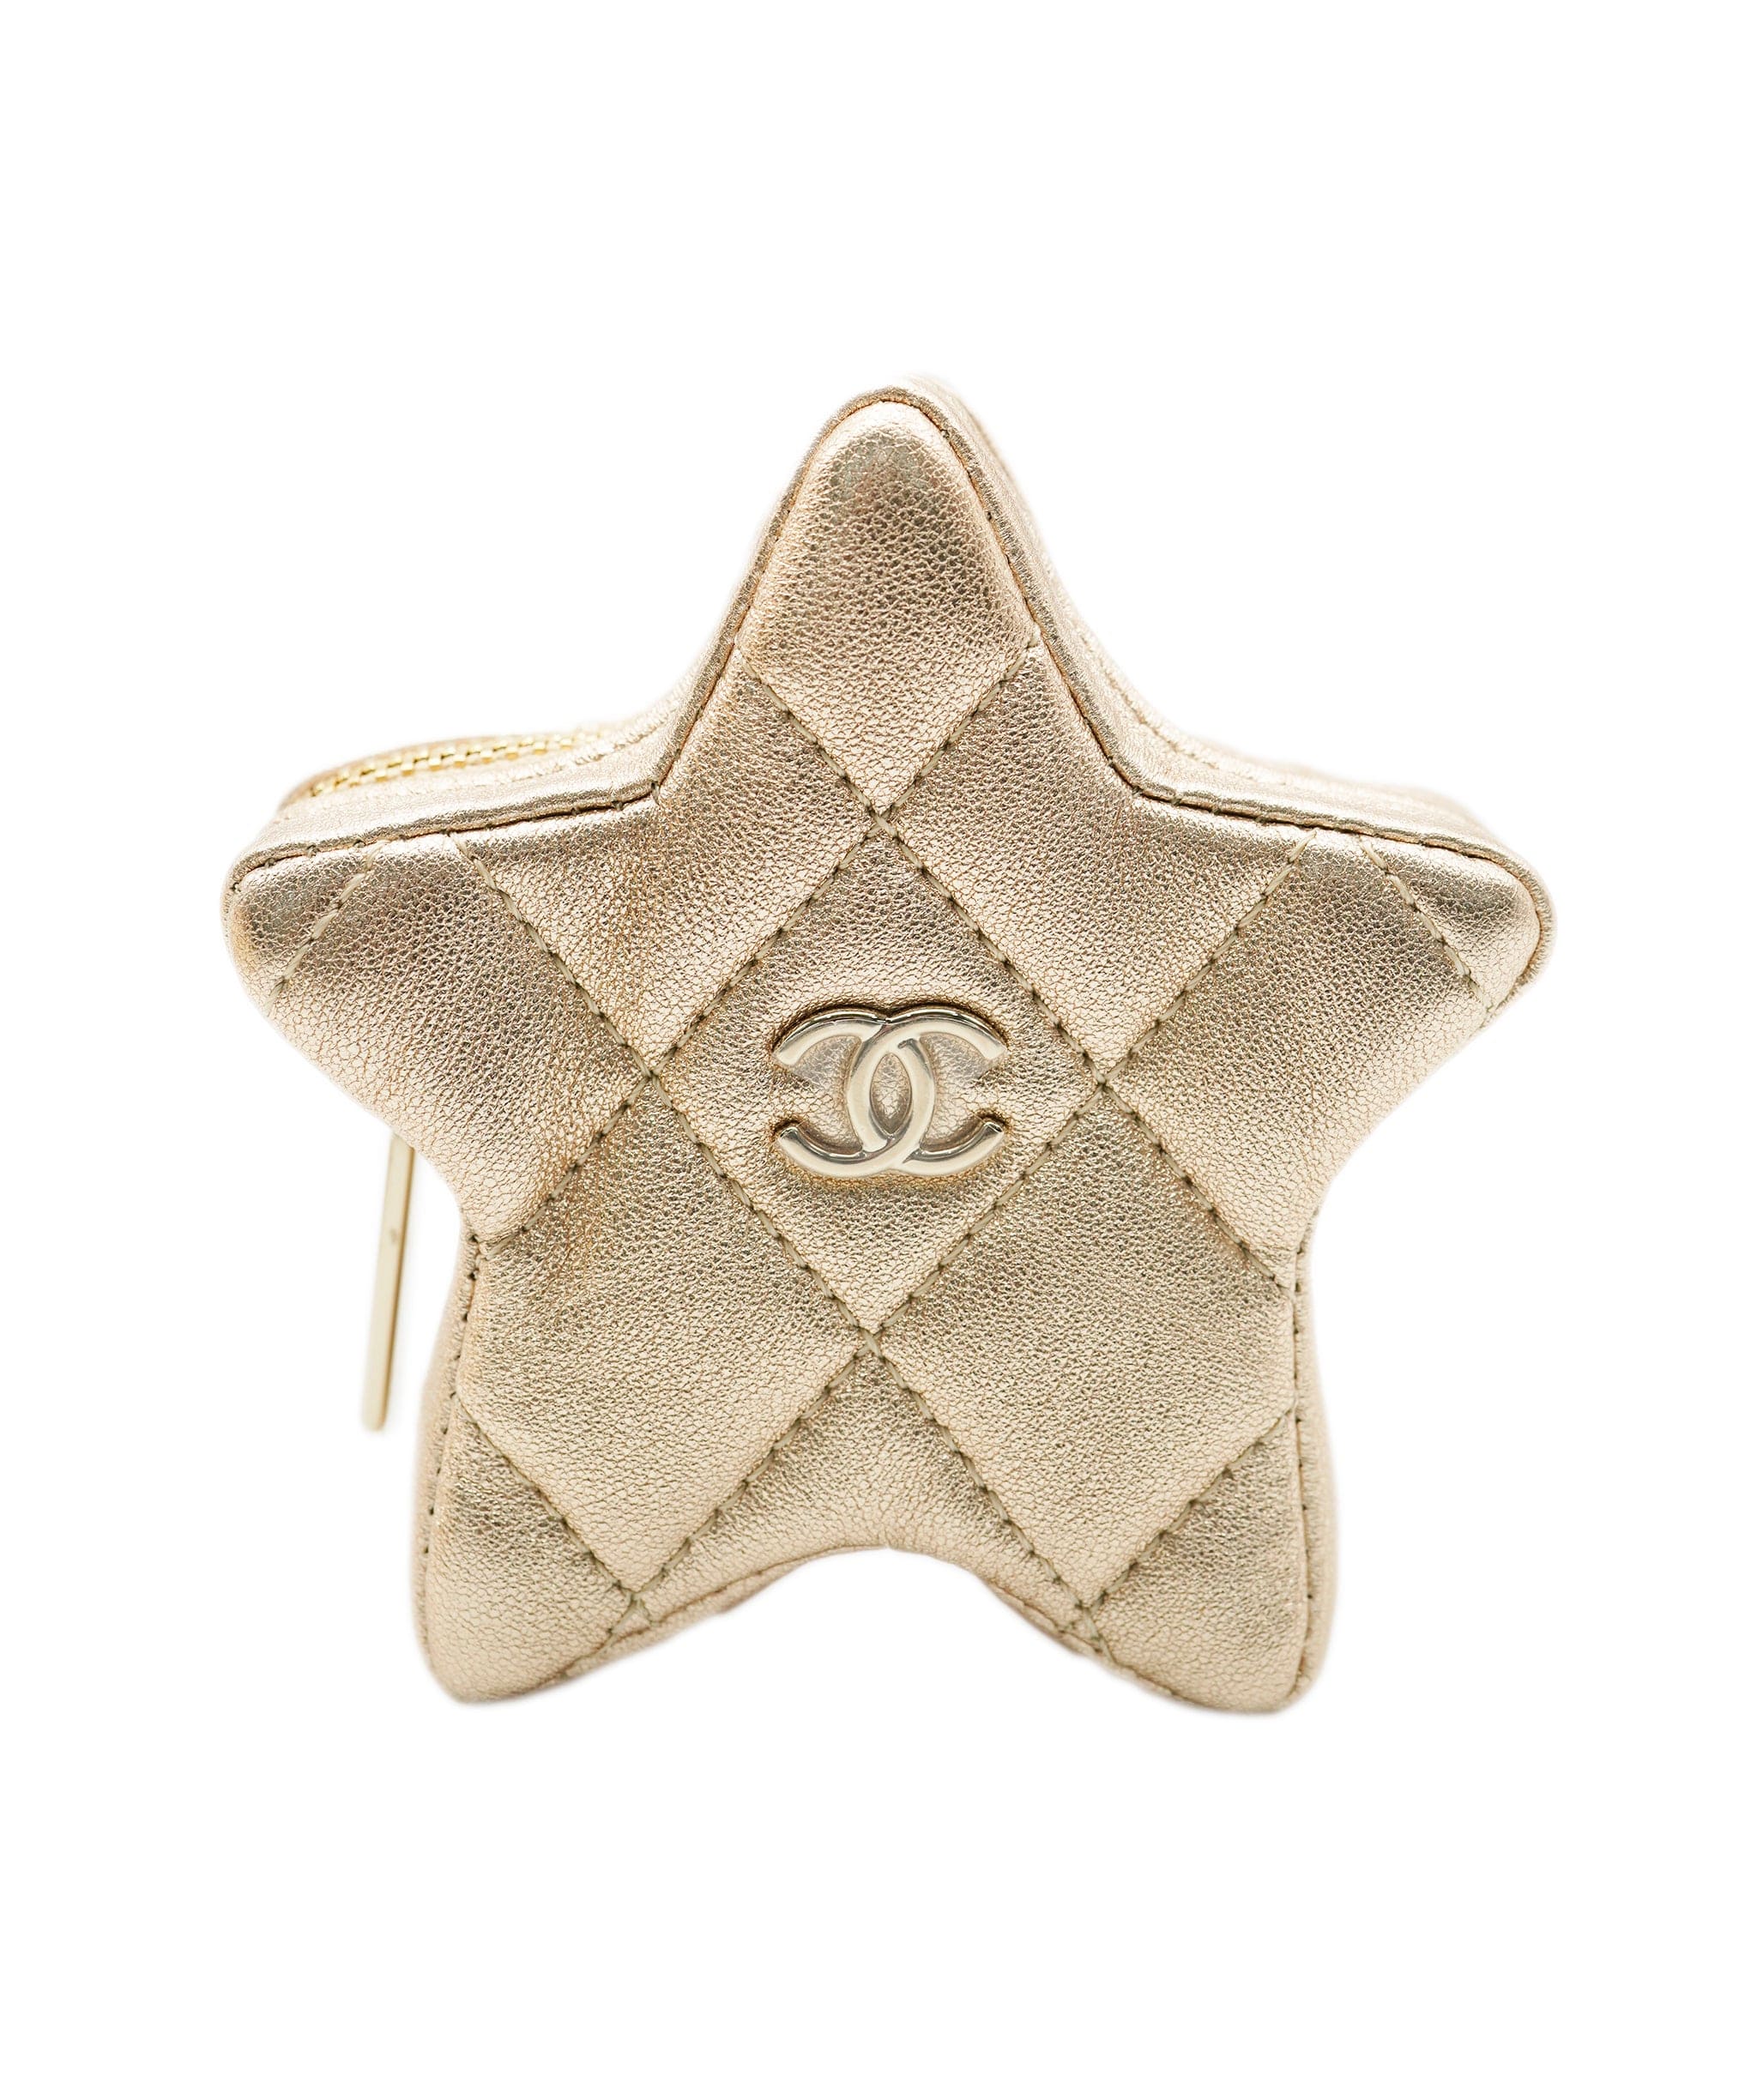 Chanel CHANEL FLAP BAG & STAR COIN PURSE ALC1142